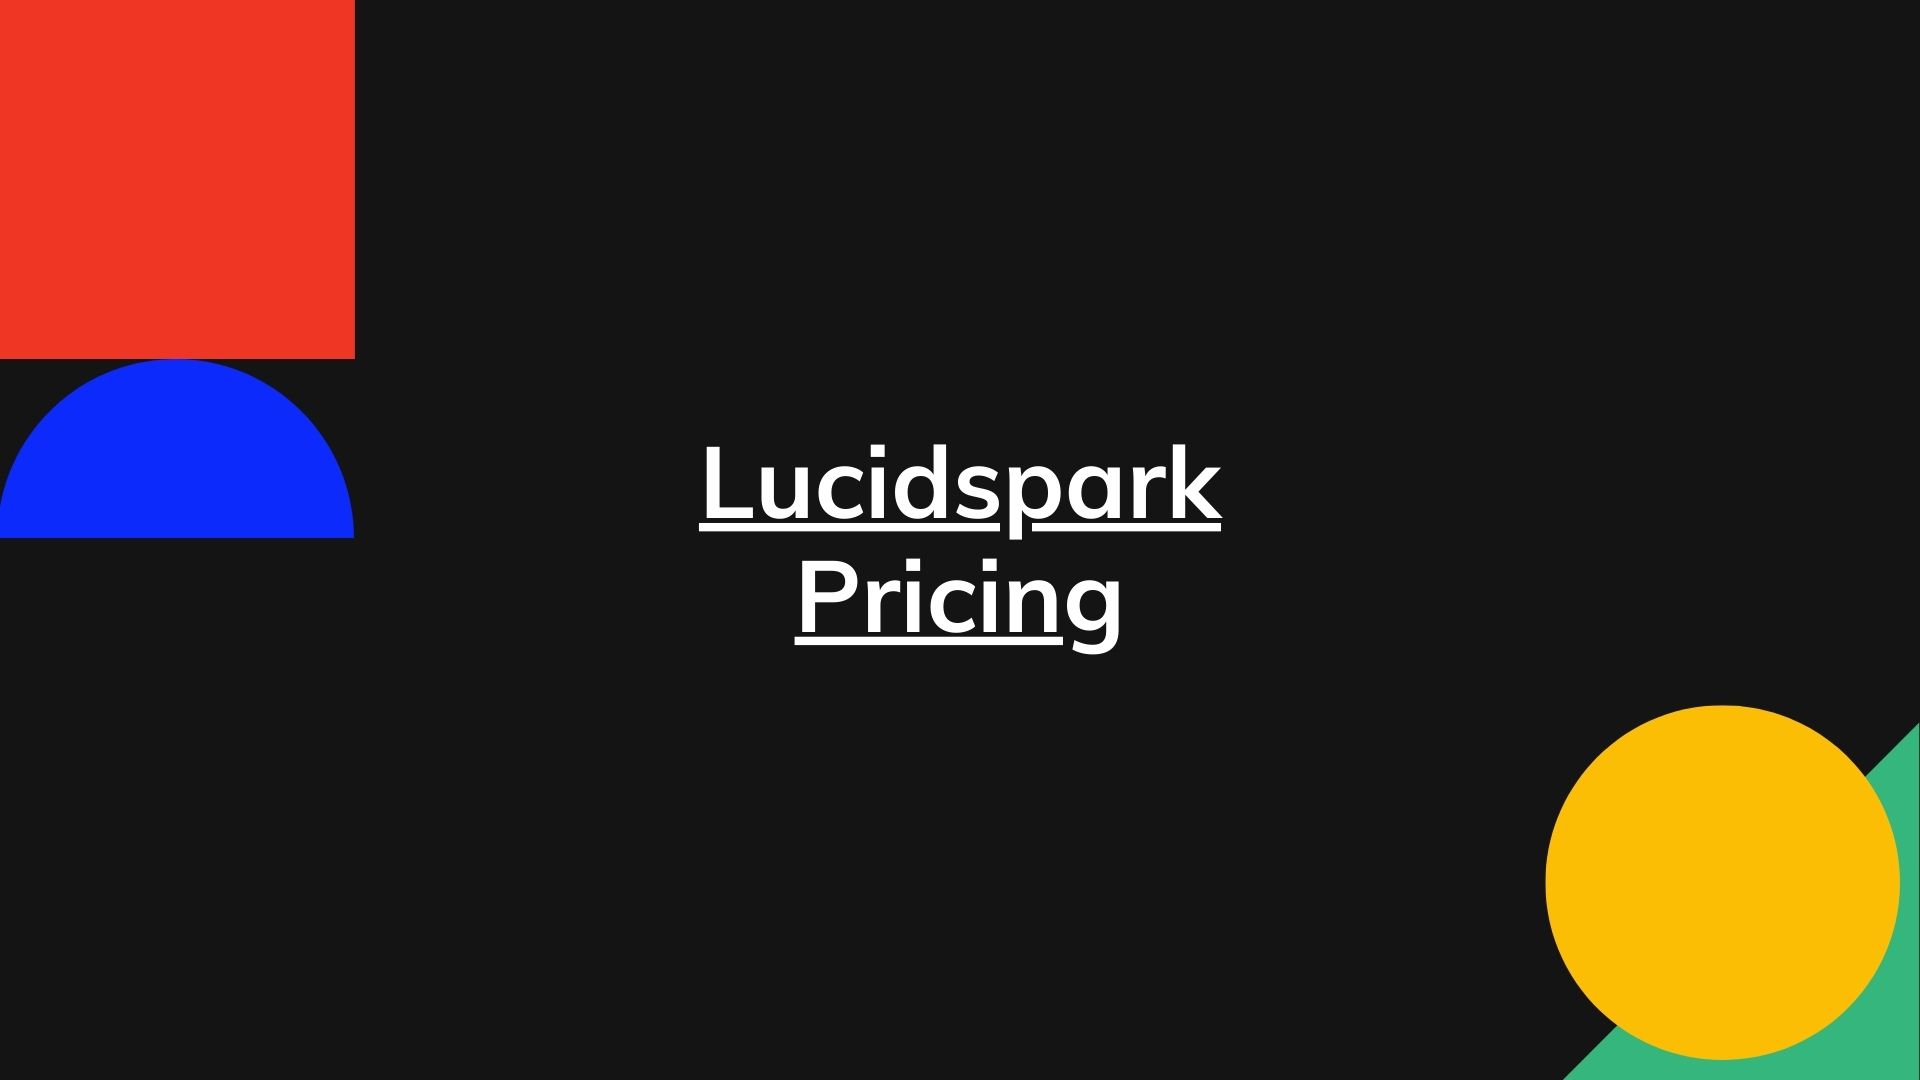 Lucidspark Pricing – Prices for All Plans, Including Enterprise